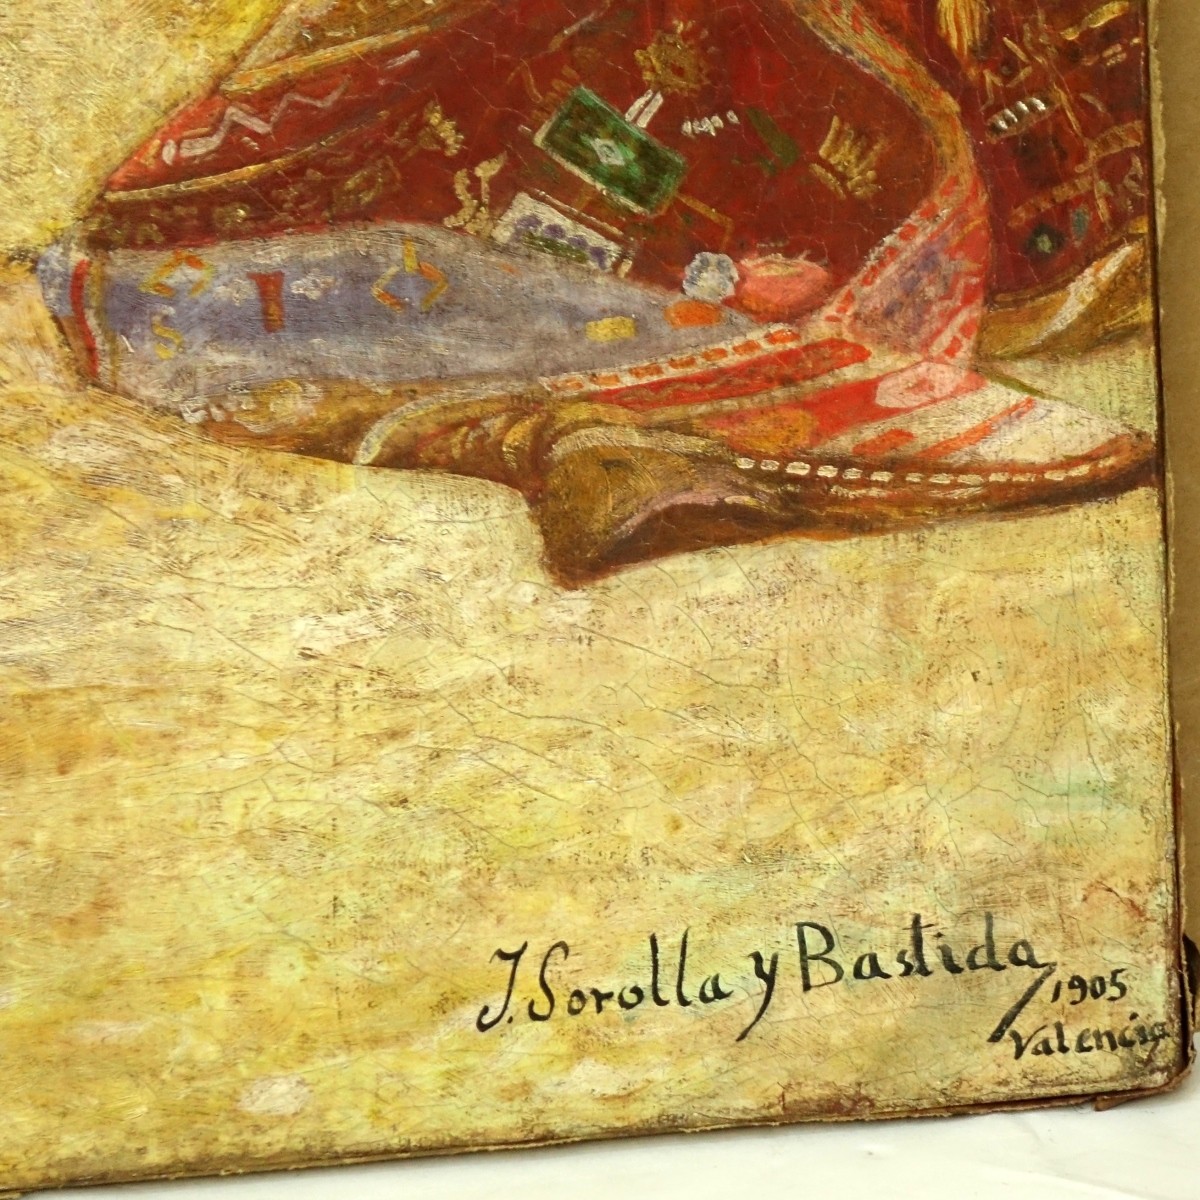 Joaquin Sorolla y Bastida (1863 - 1923) Oil/Canvas